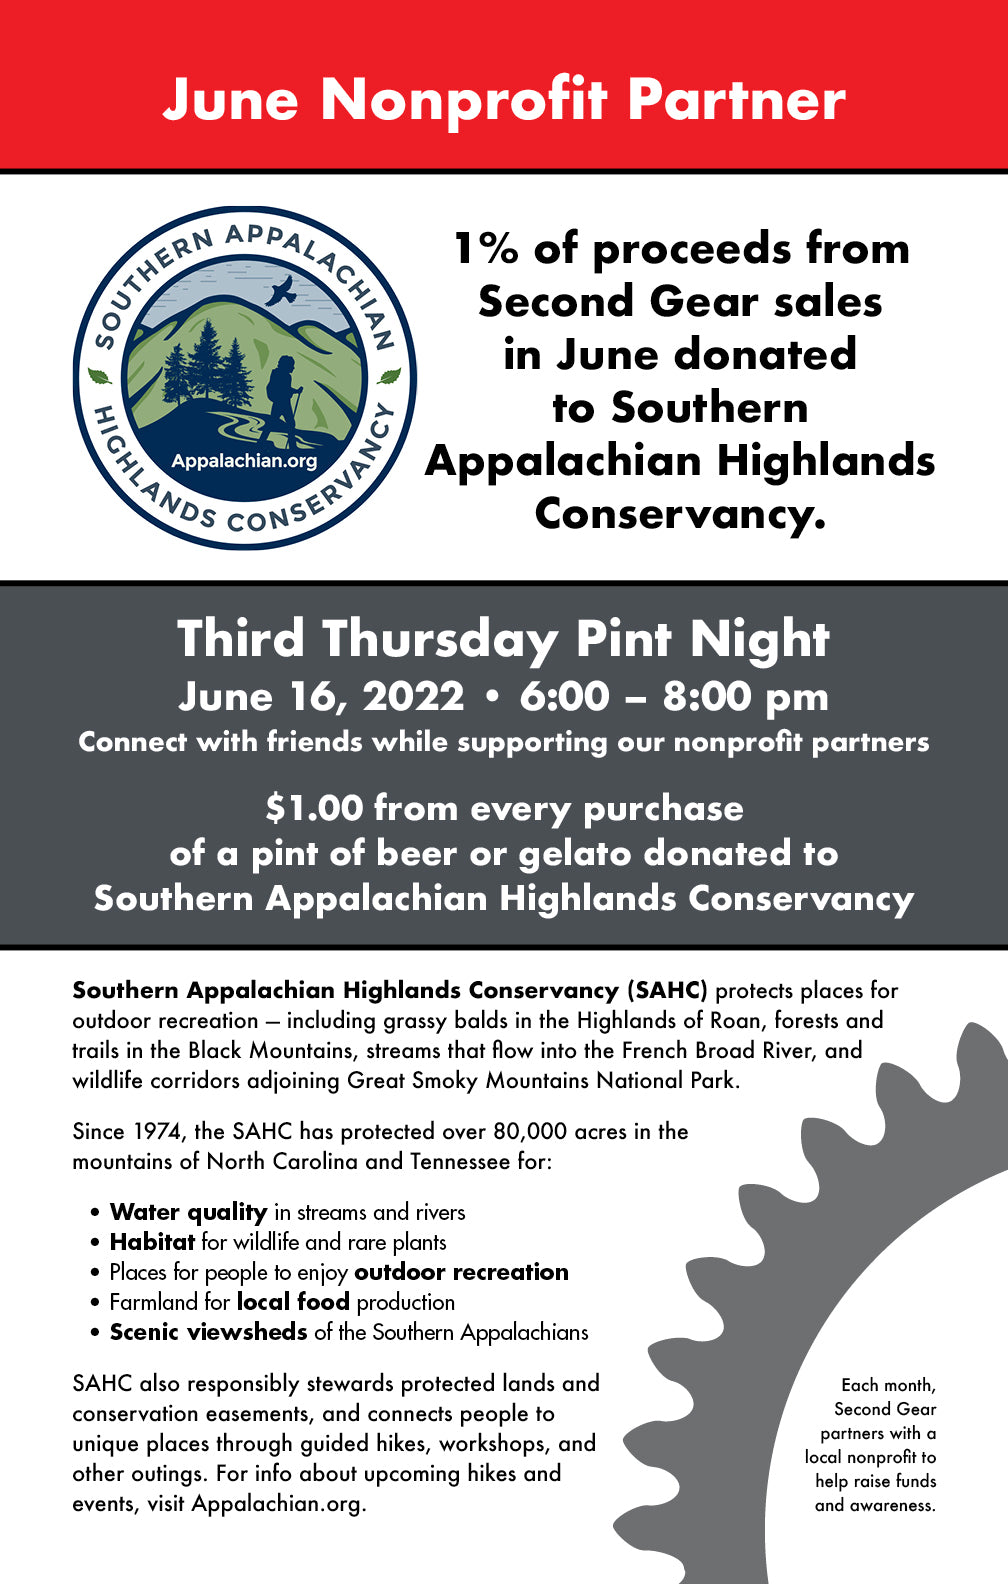 Second Gear June's Nonprofit: Southern Appalachian Highlands Conservancy